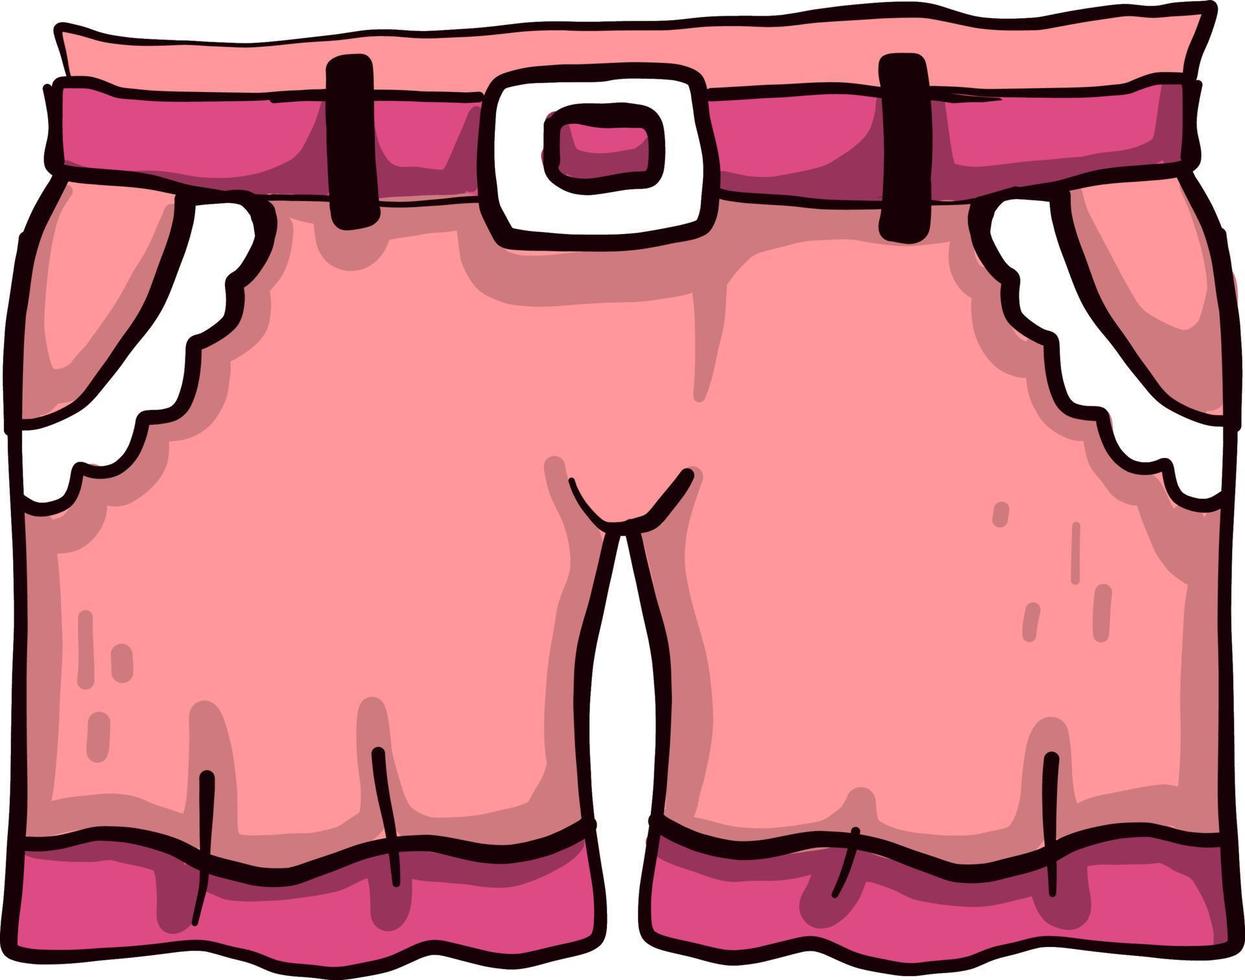 Pink shorts, illustration, vector on white background.